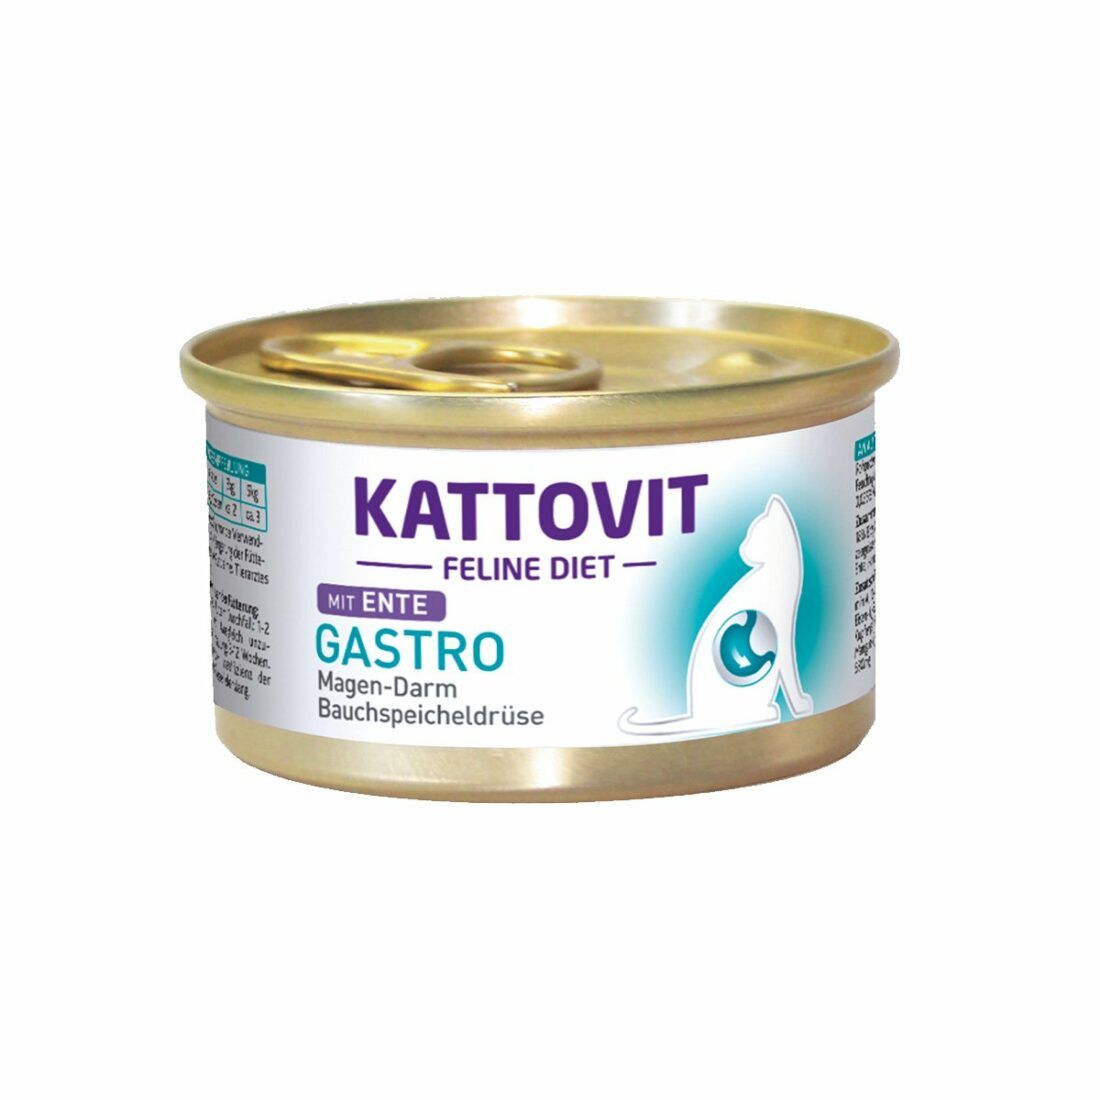 KATTOVIT Feline Diet Gastro